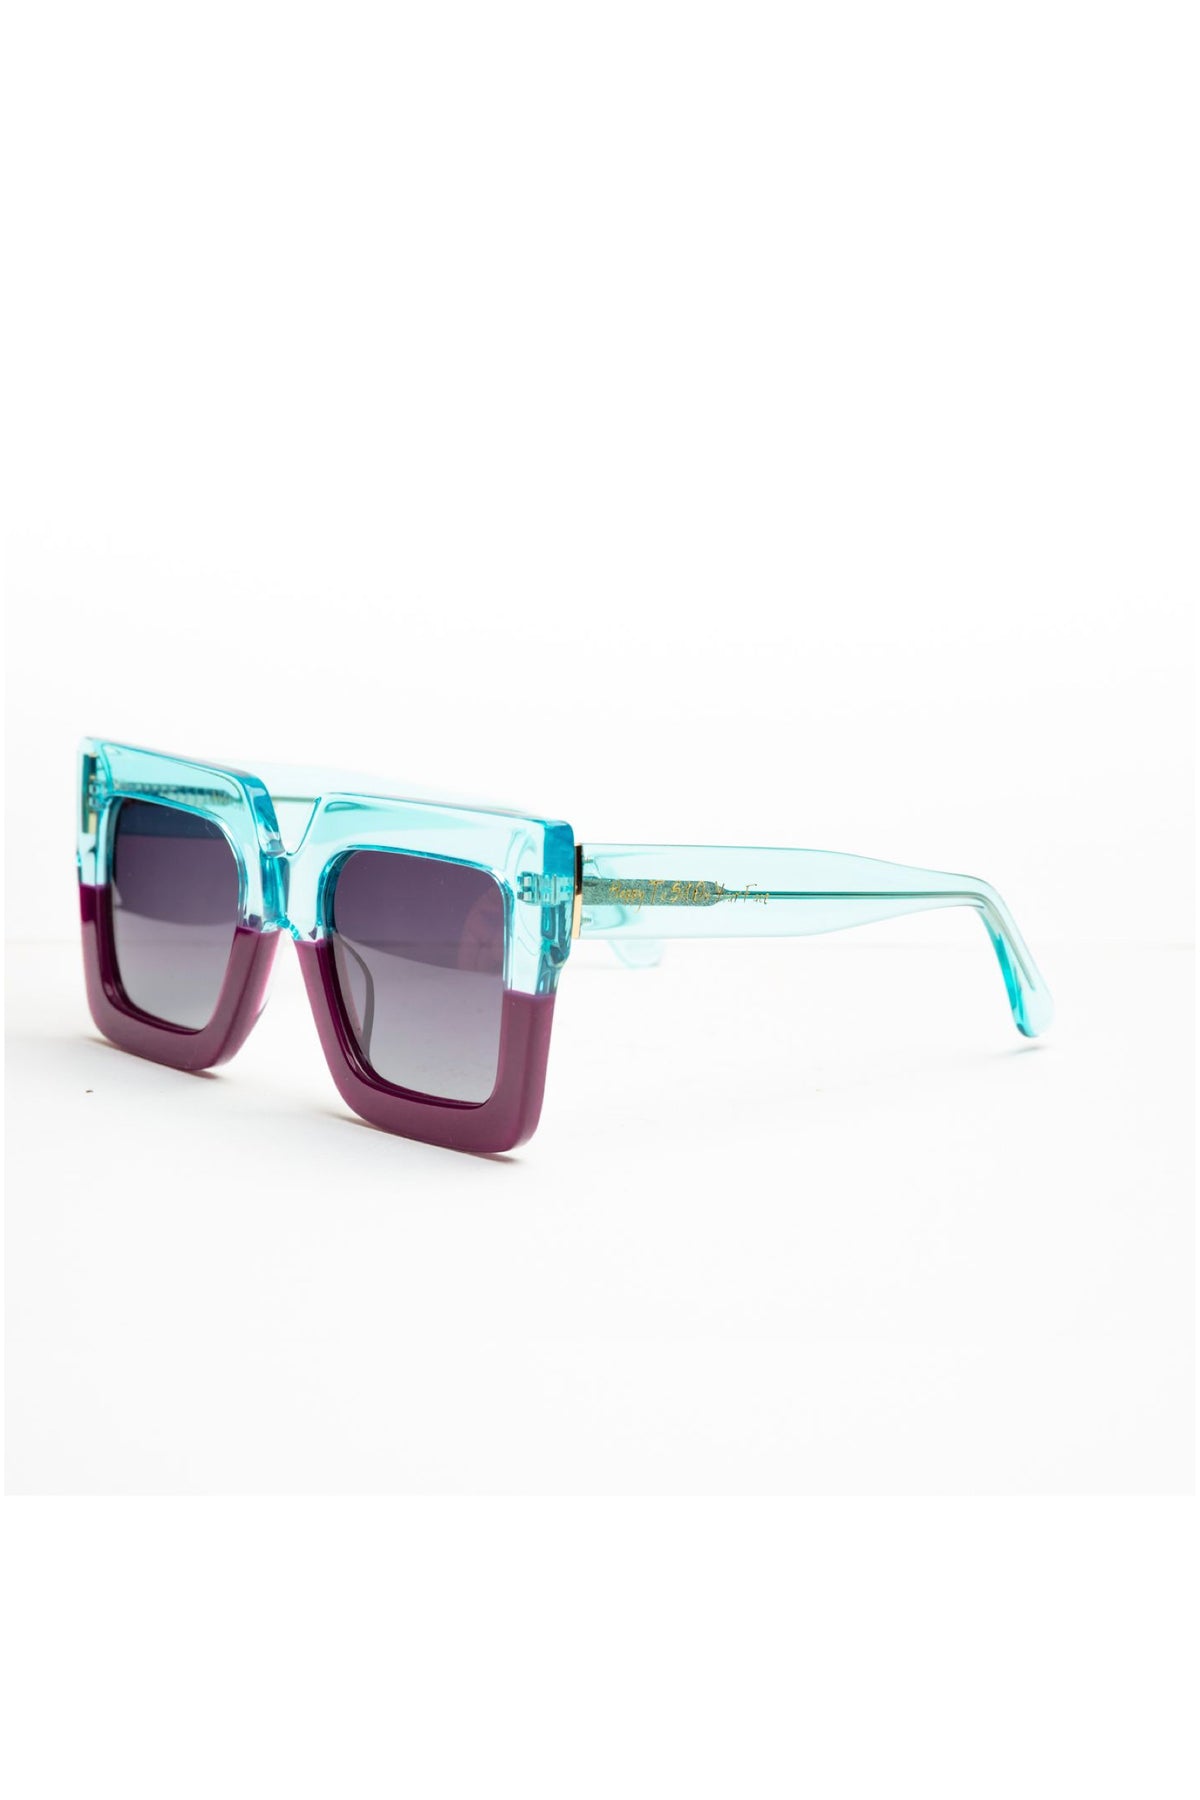 Harlow Turquoise Purple Sunglasses